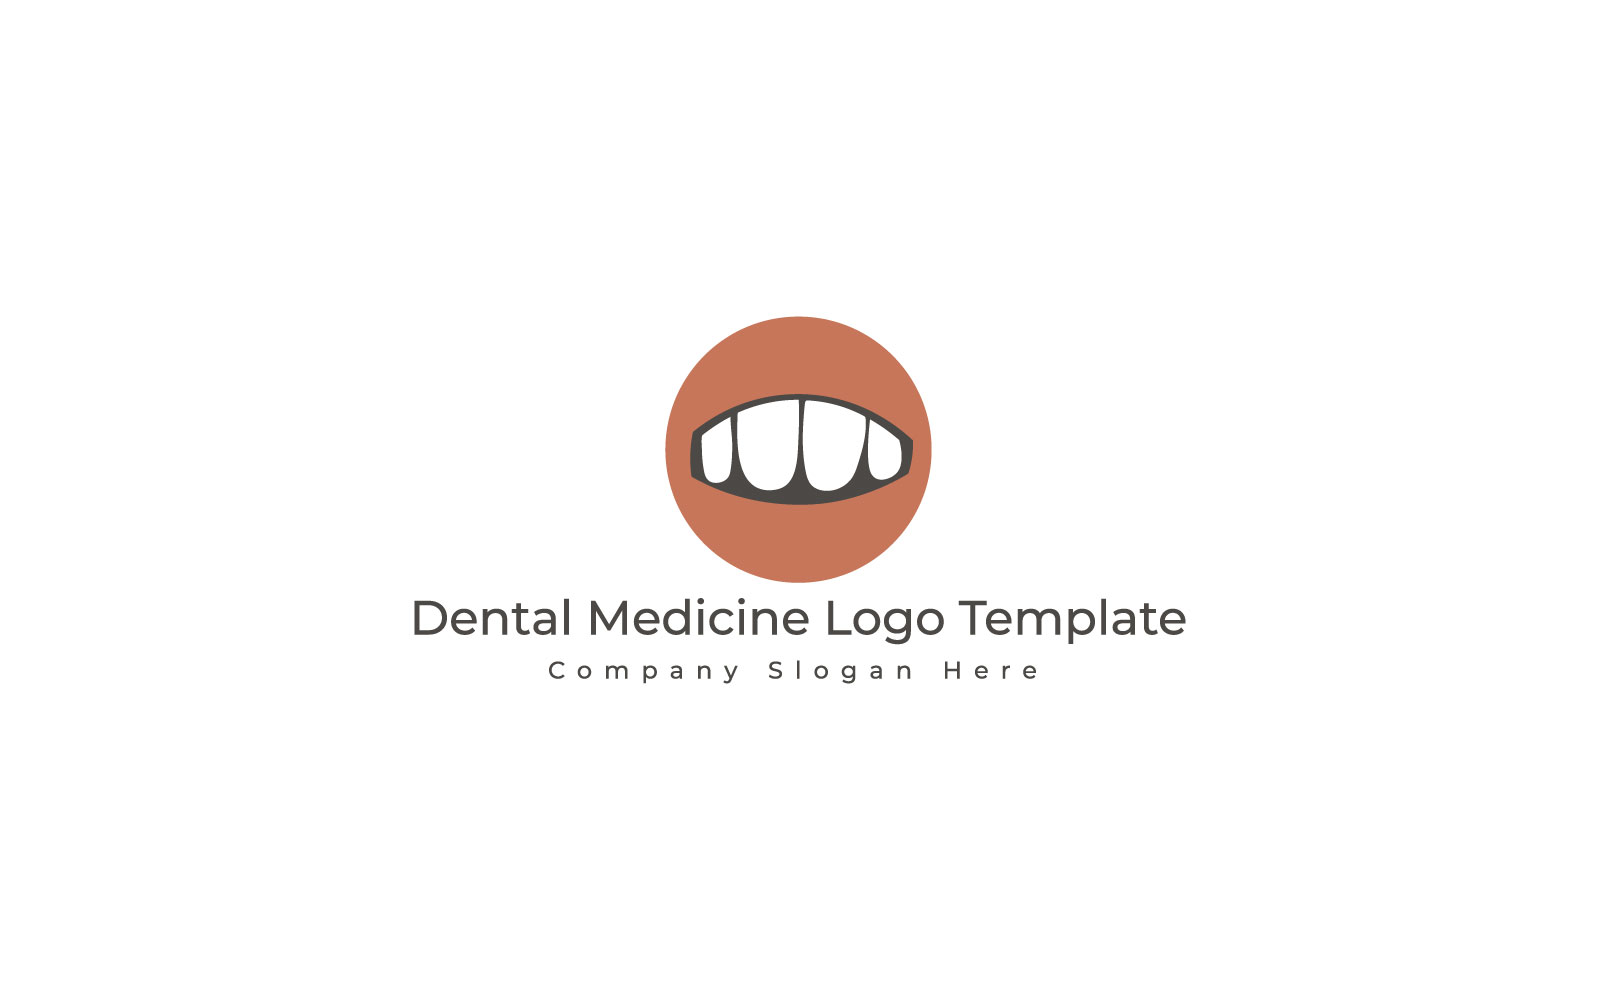 Dental Medicine Logo Template